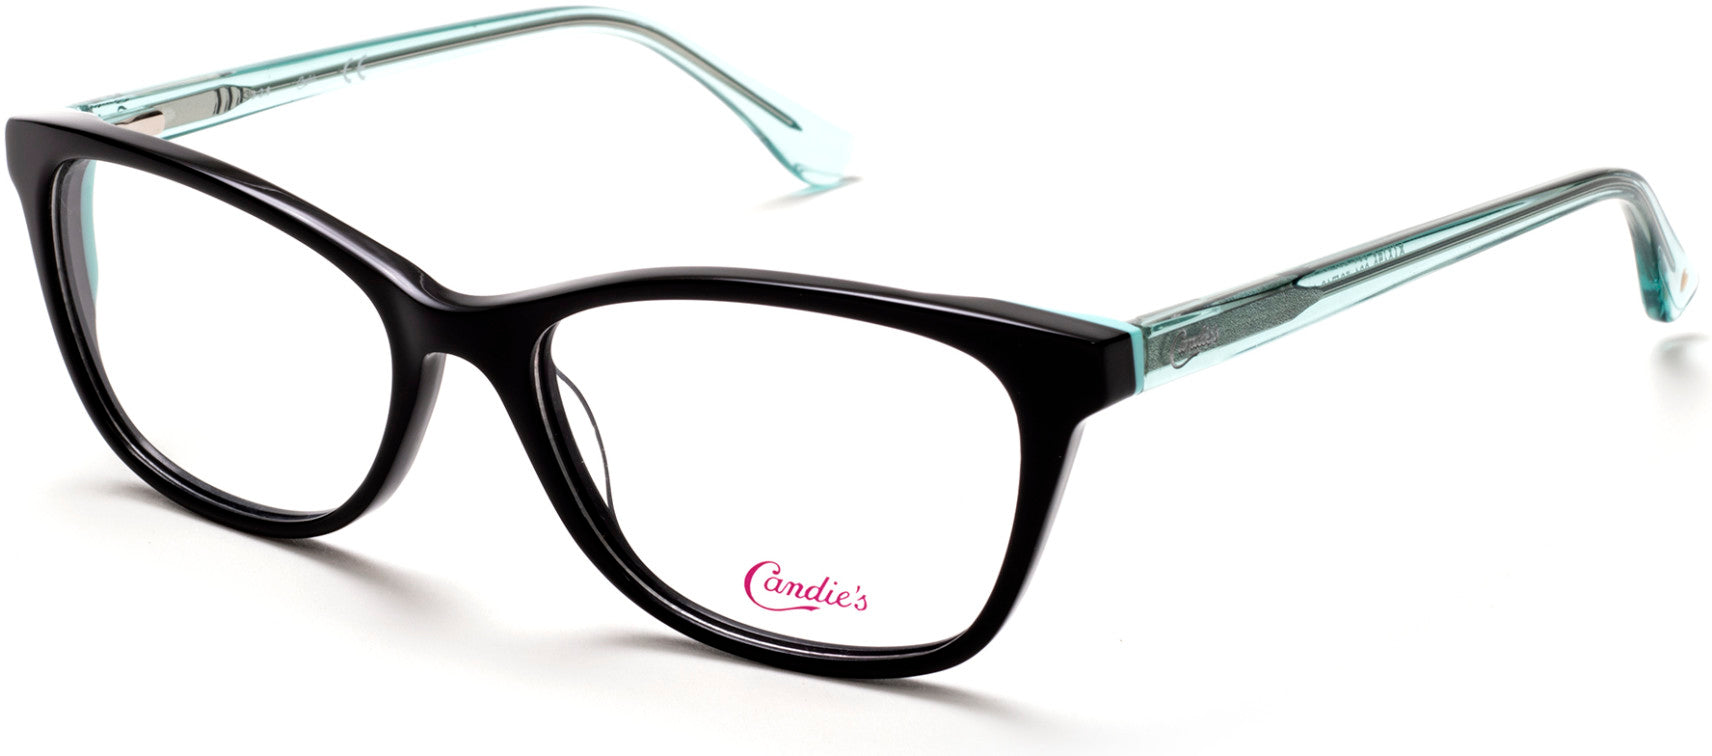 Candies CA0176 Cat Eyeglasses 001-001 - Shiny Black